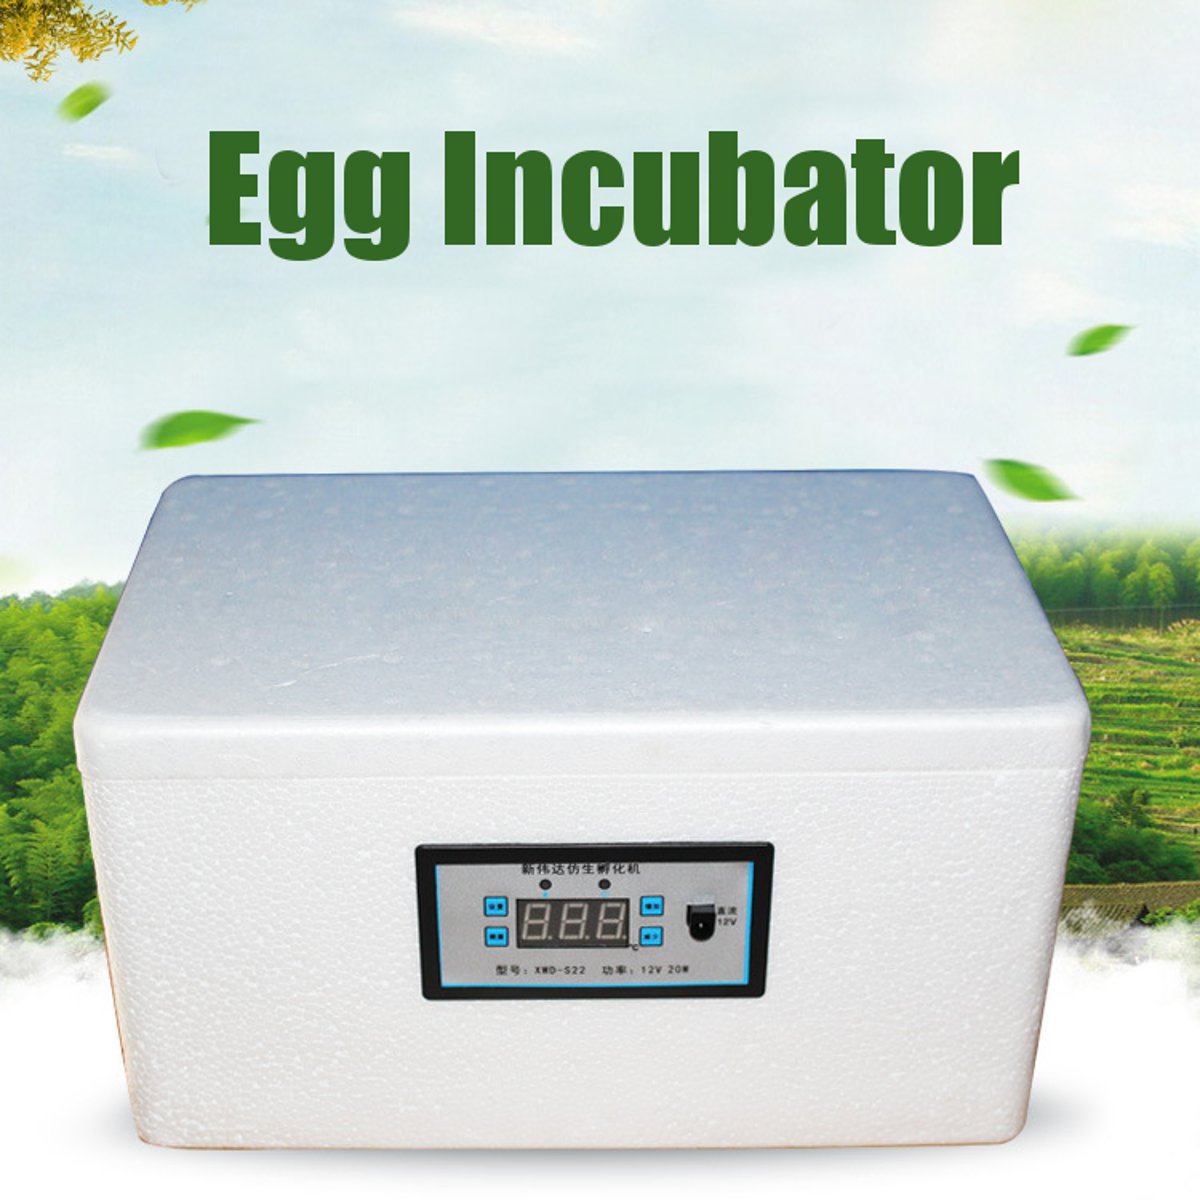 32-Eggs-Automatic-Incubator-Digital-Chicken-Poultry-Hatcher-Temperature-Control-1534434-1